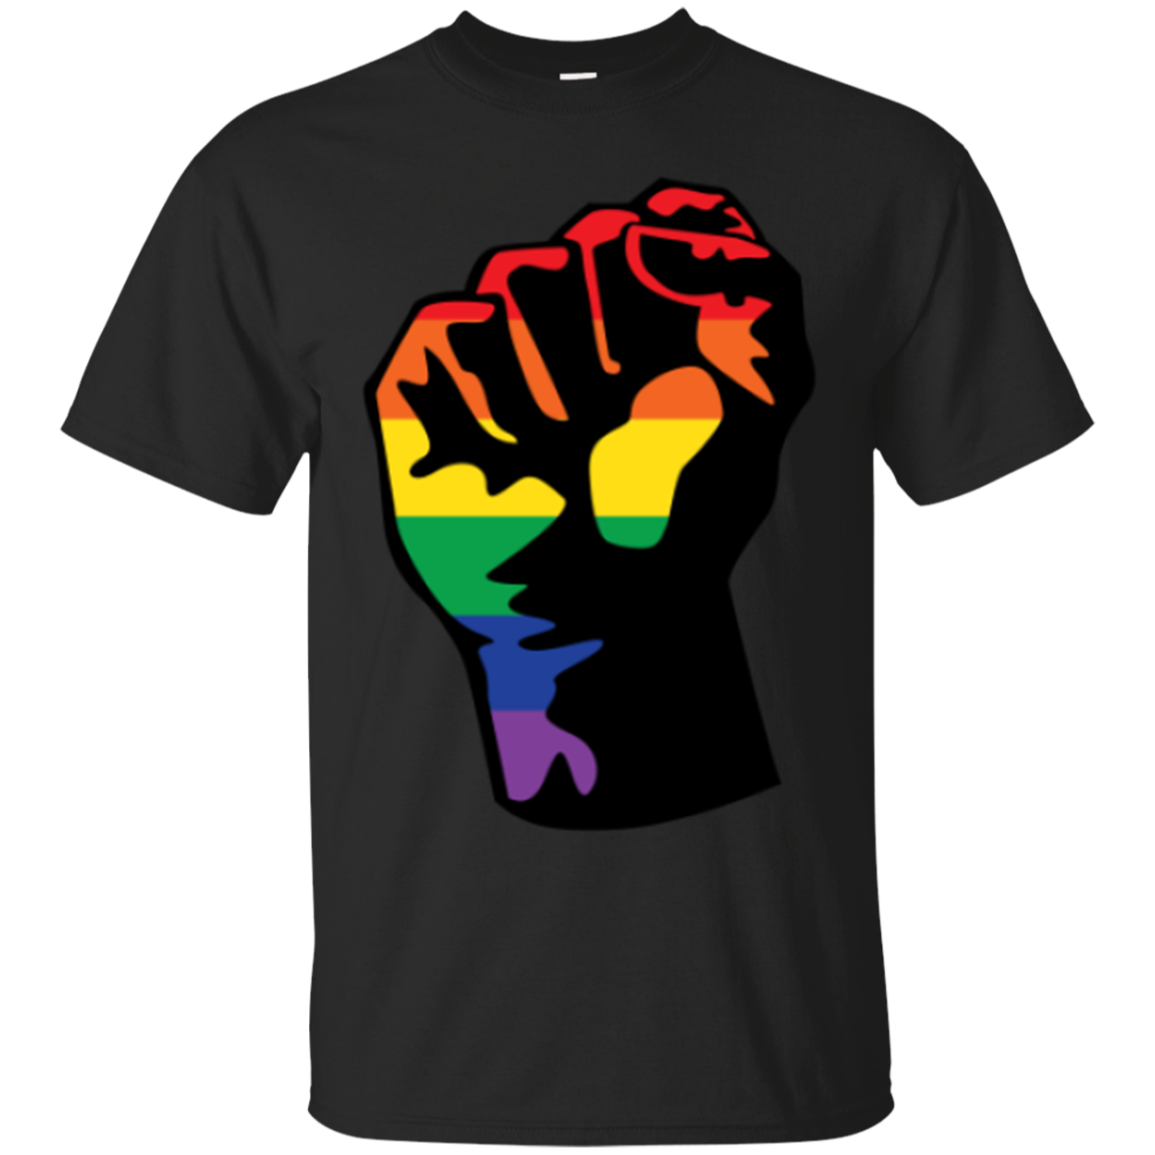 LGBT Pride Unity black T shirt for men